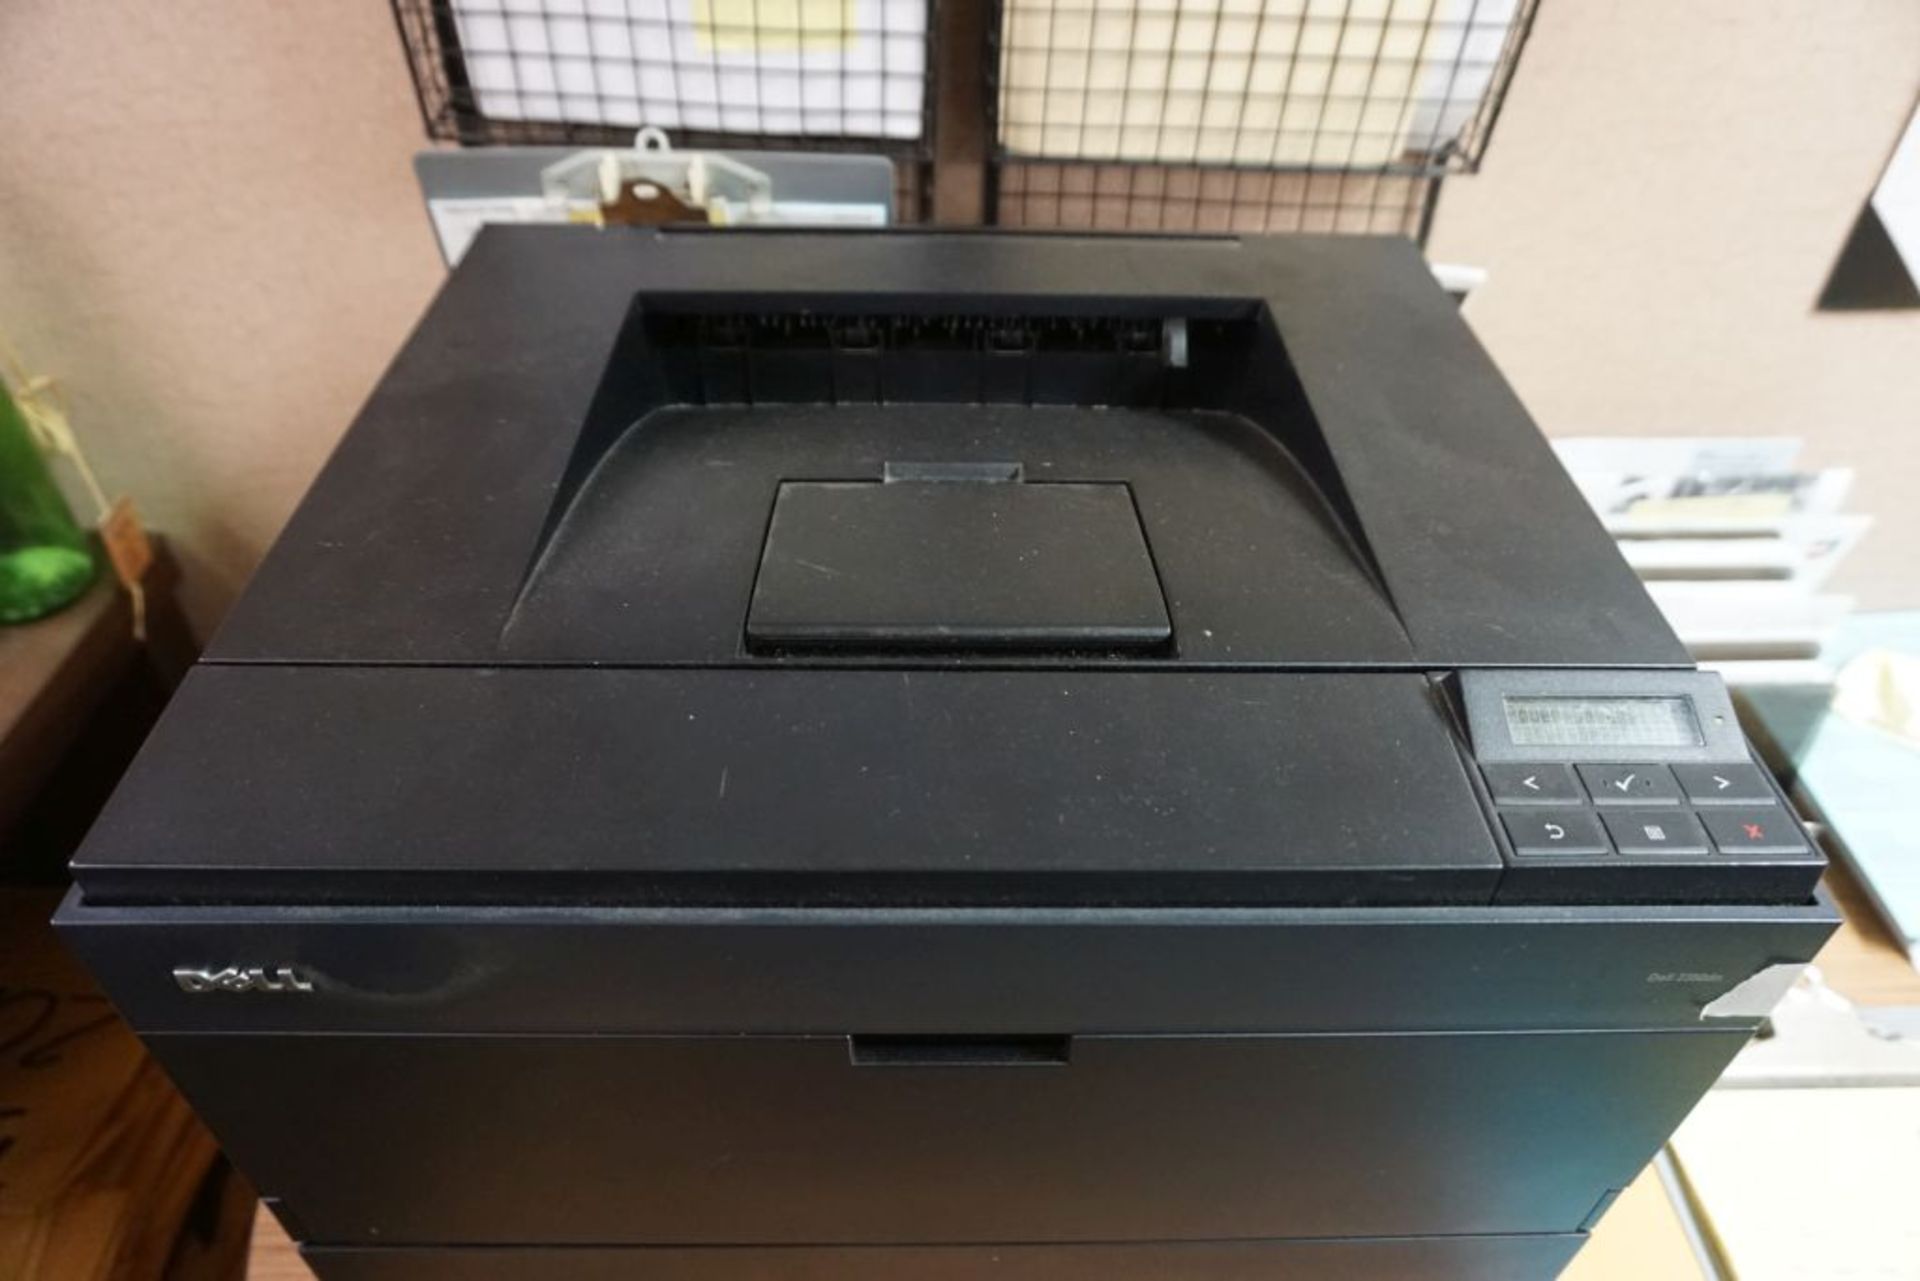 Double Tray Dell Printer | Model No. 2350dn - Image 2 of 7